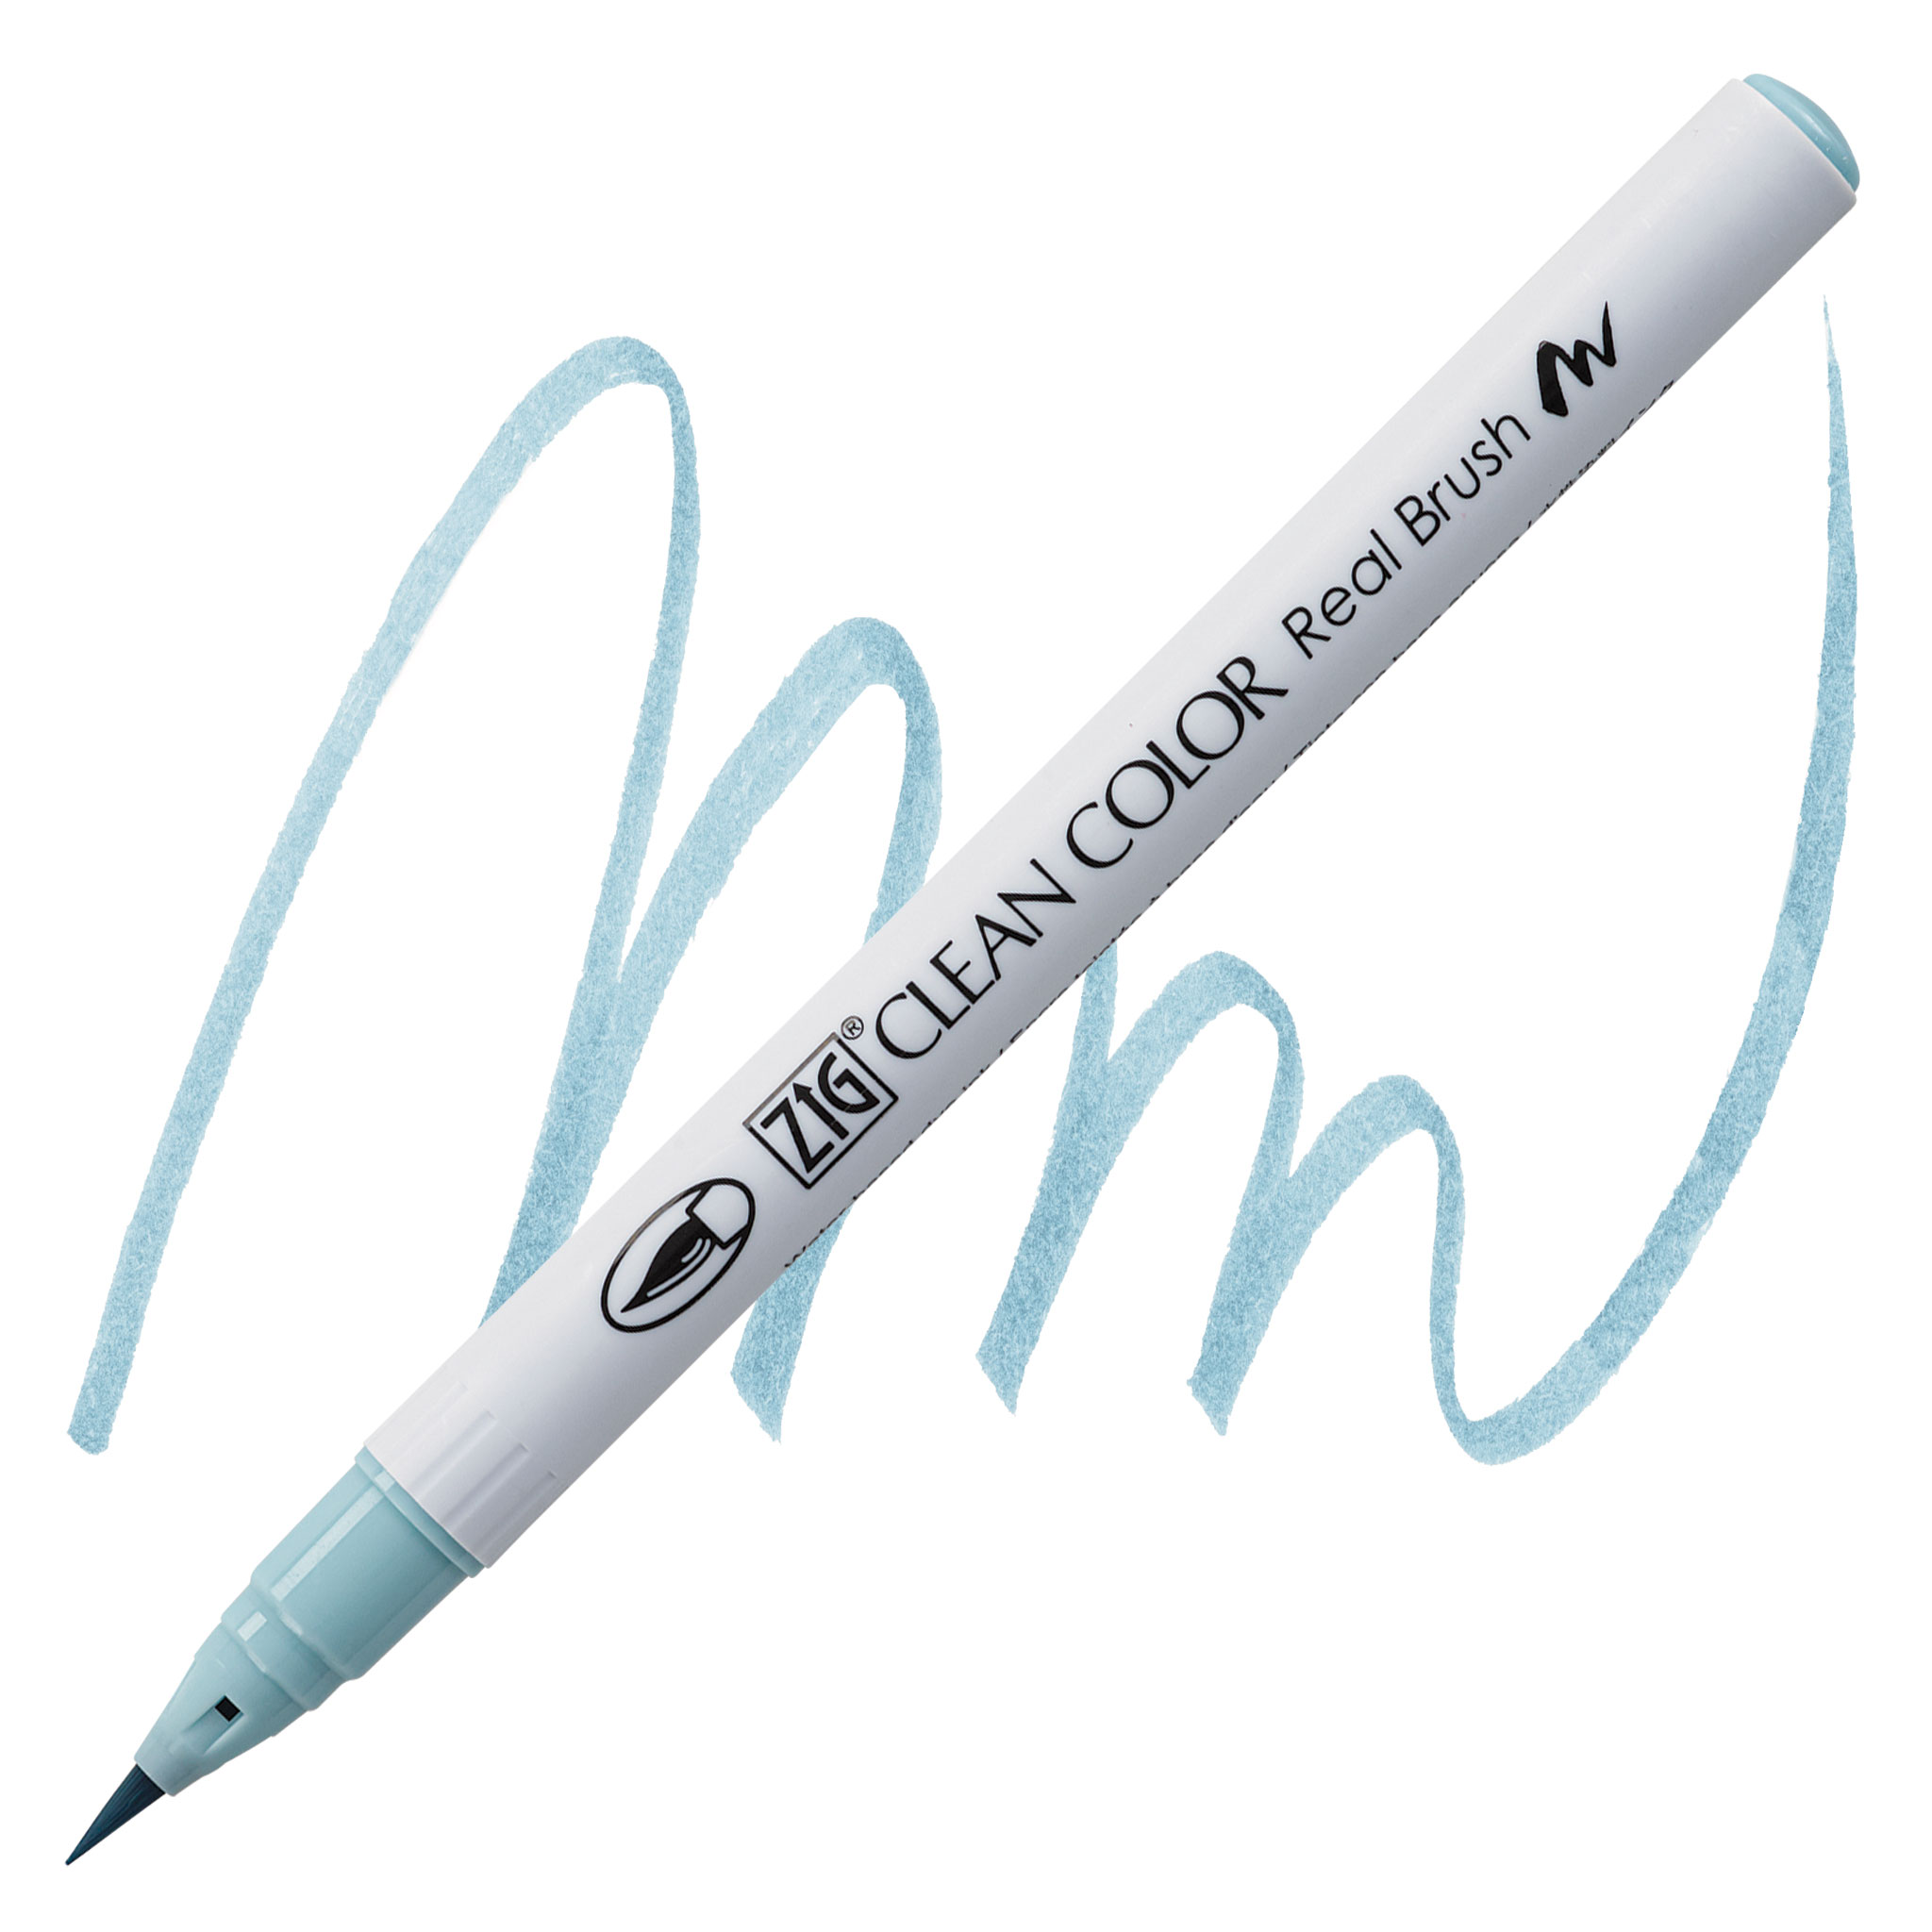 Kuretake Zig Clean Color Real Brush Watercolour Pens 30pcs Set B